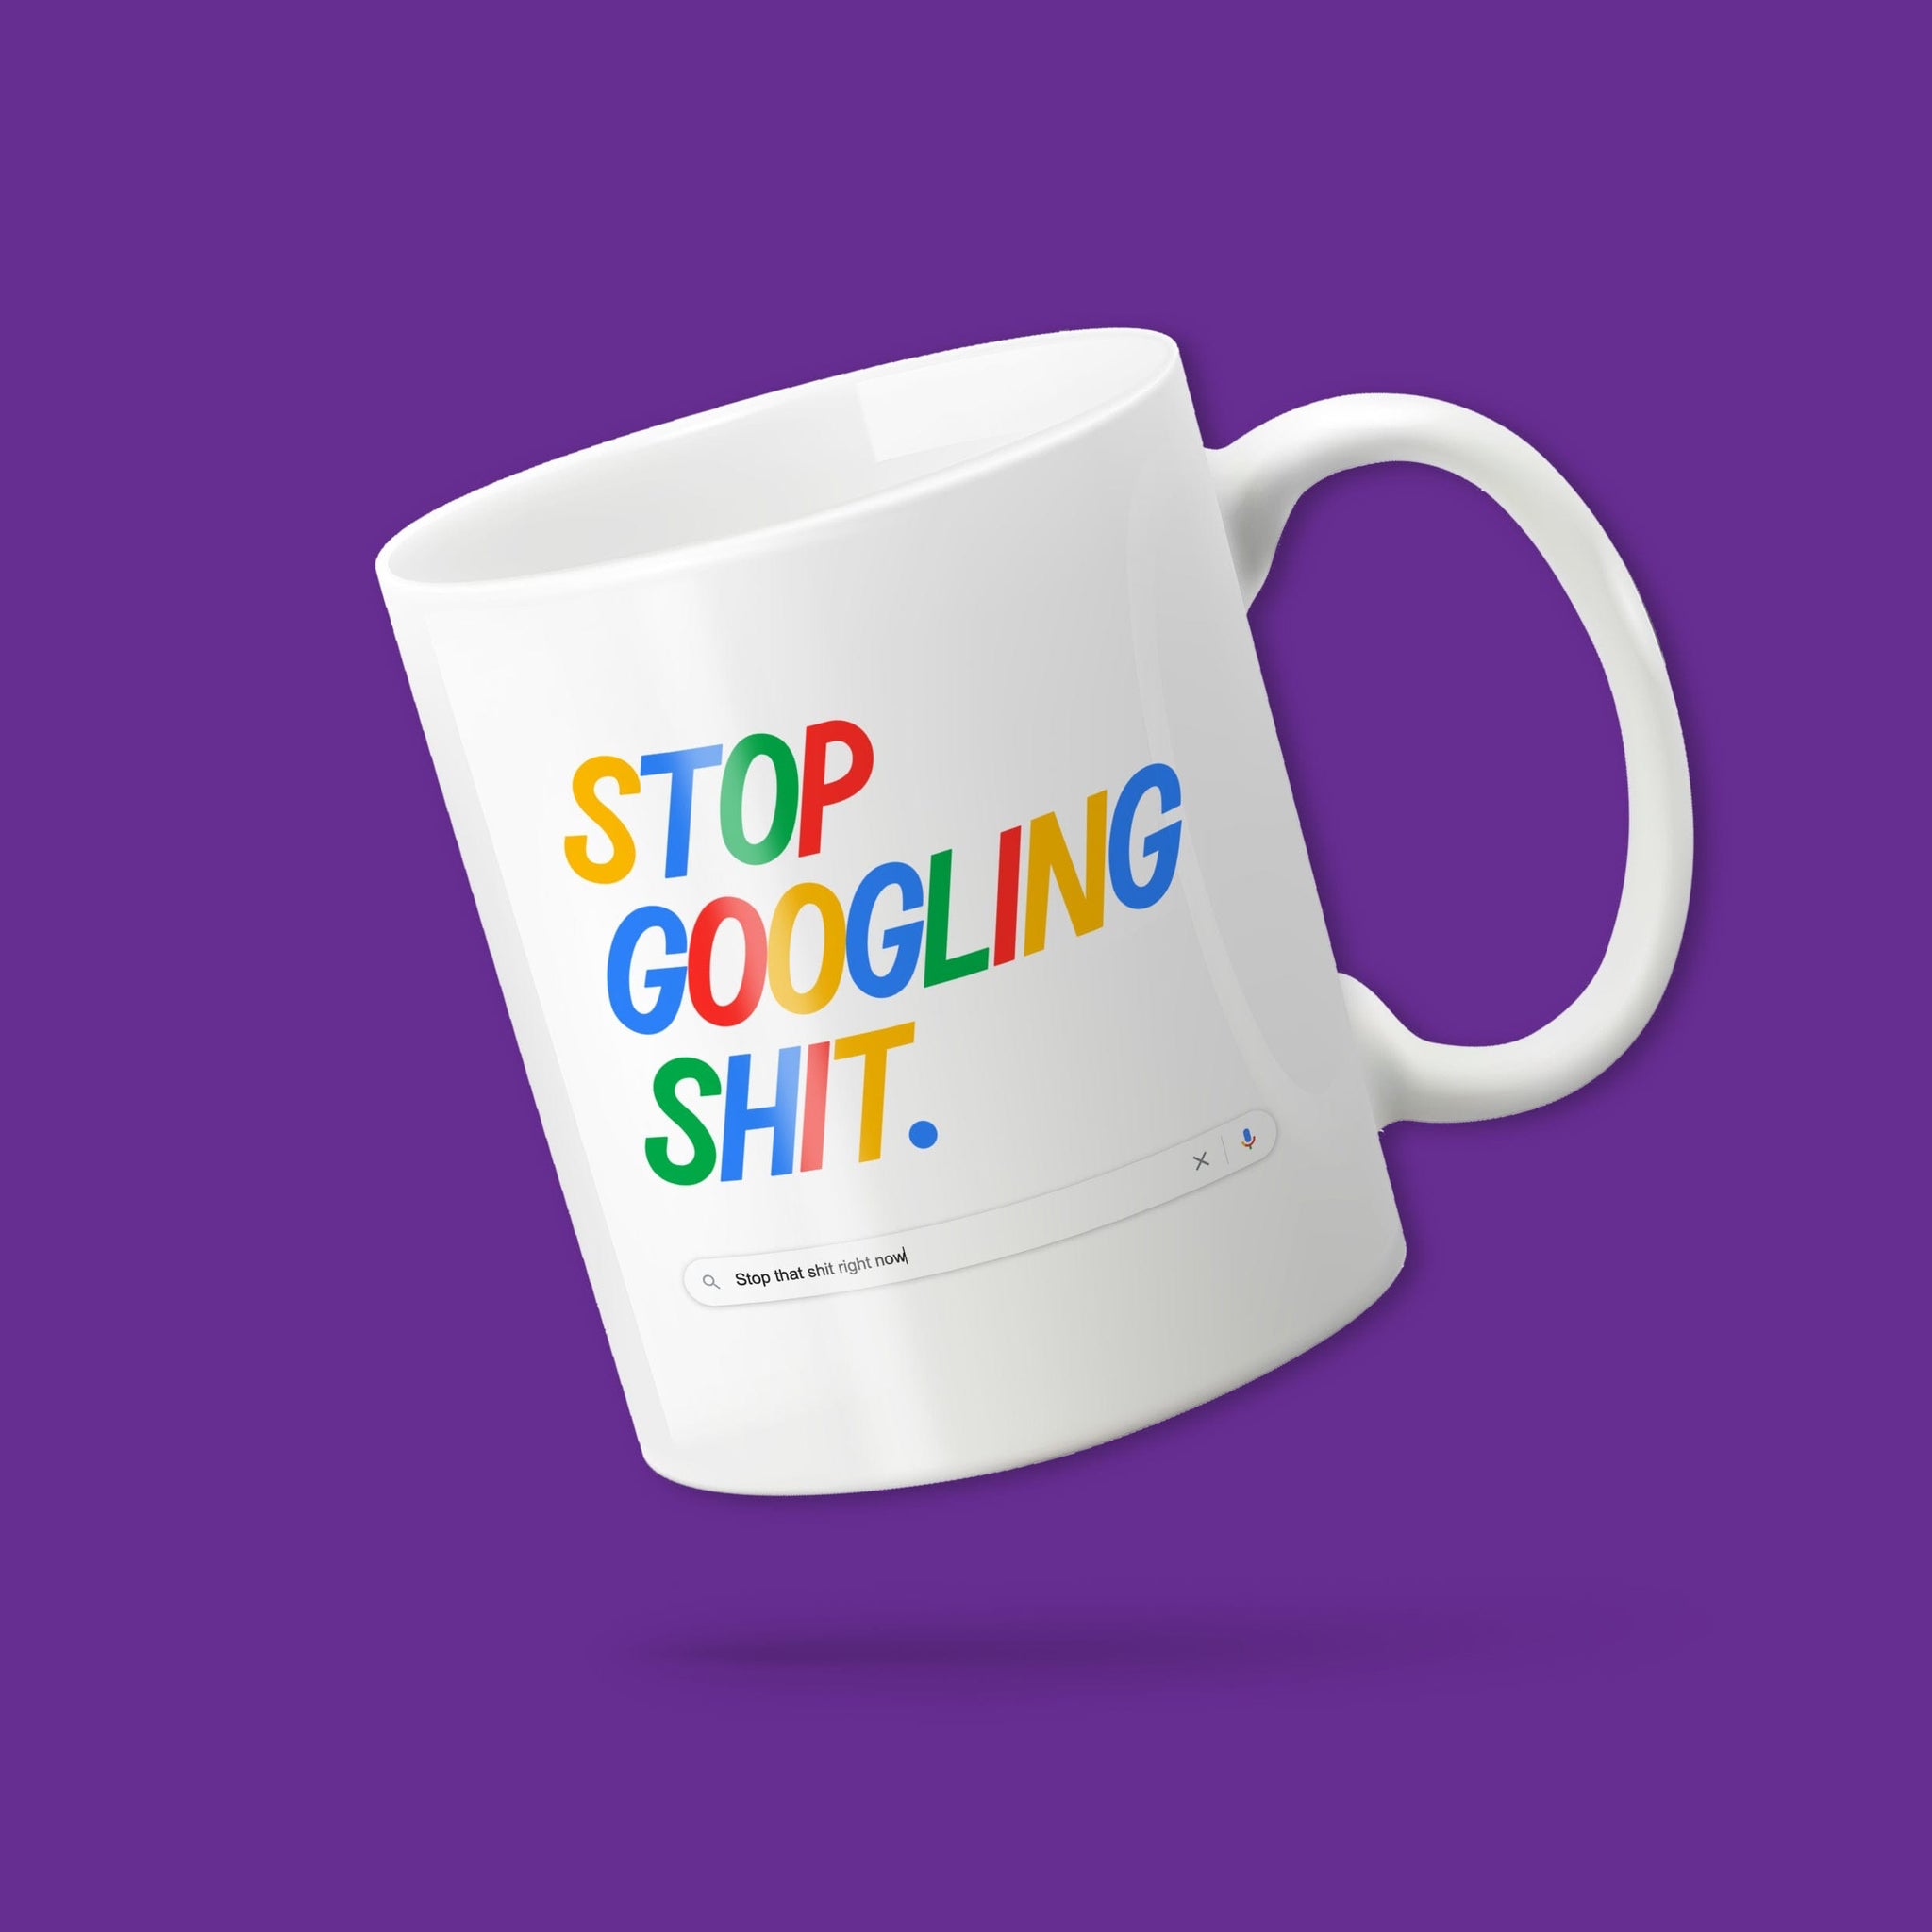 Stop Googling S*** mug